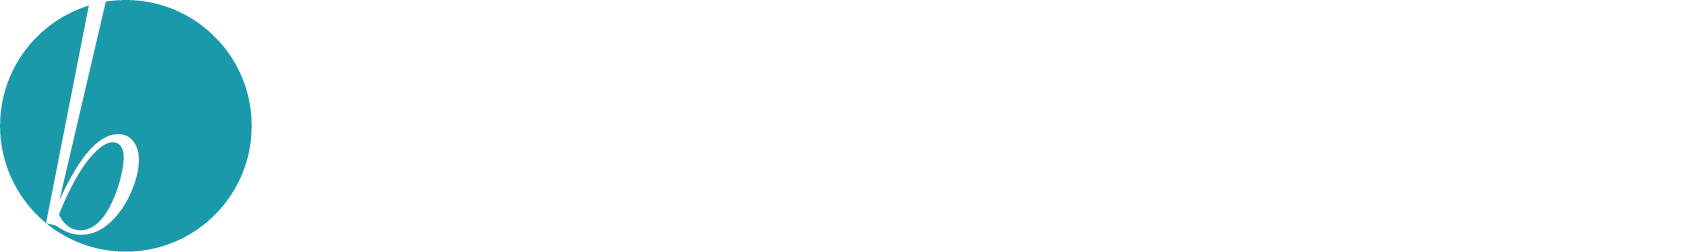 Beth Cohen Design Logo